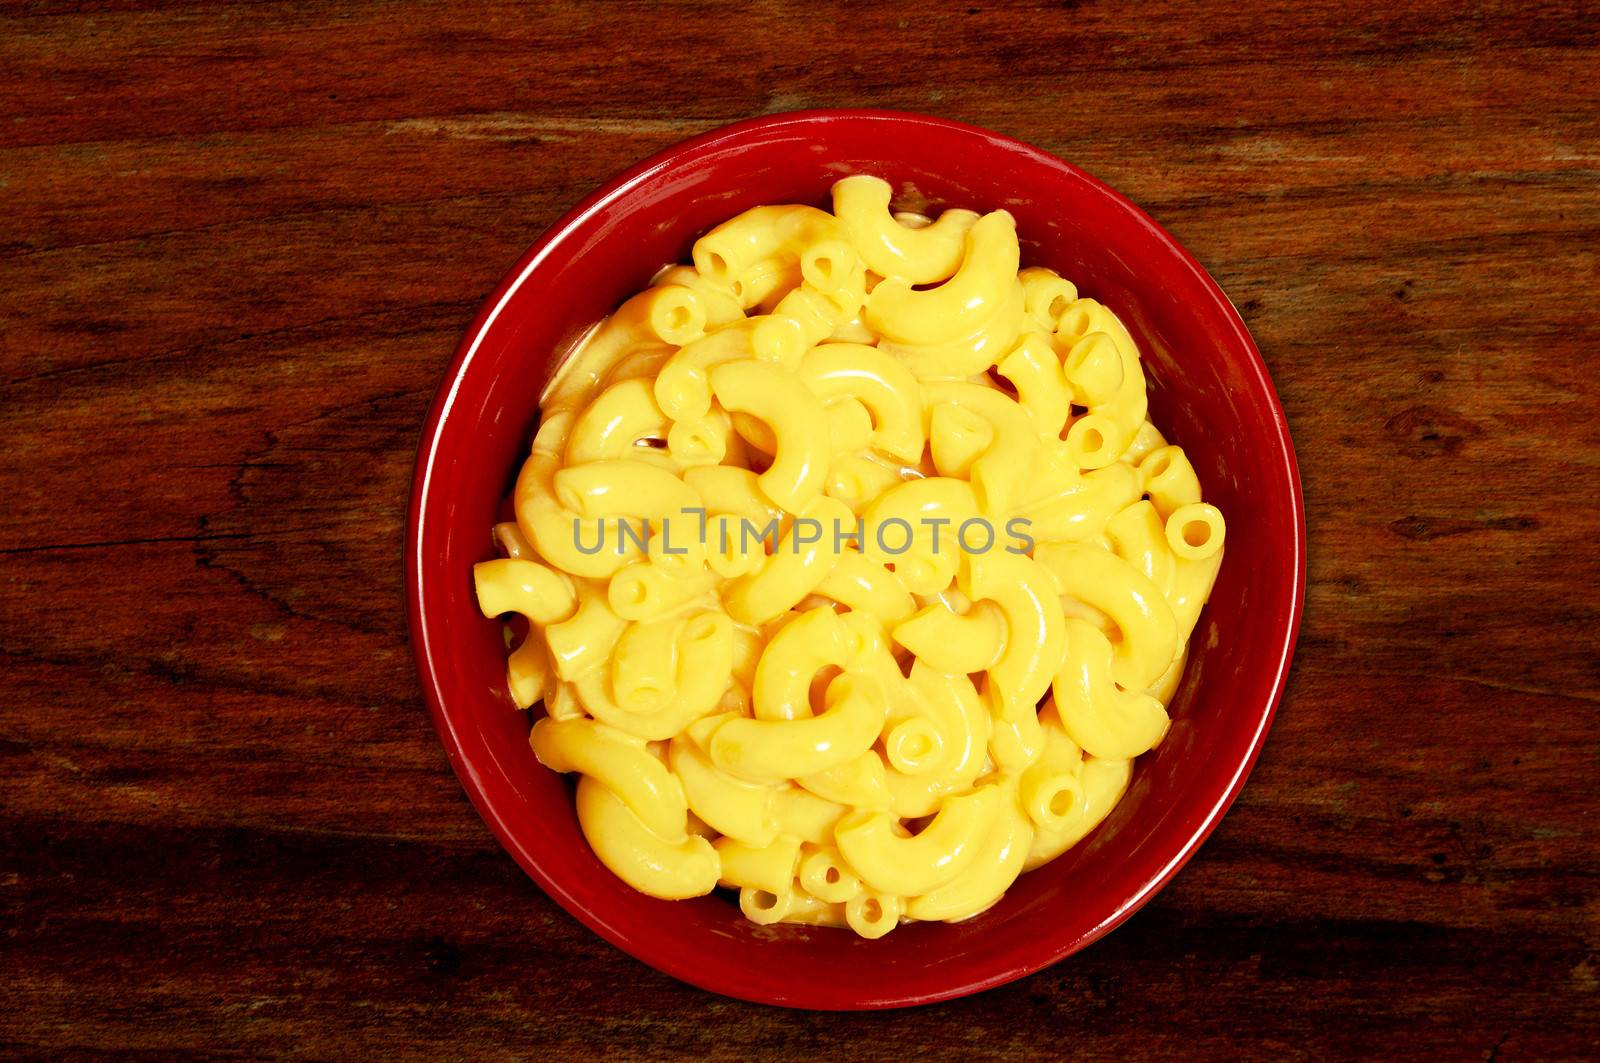 cheesy pasta by ftlaudgirl